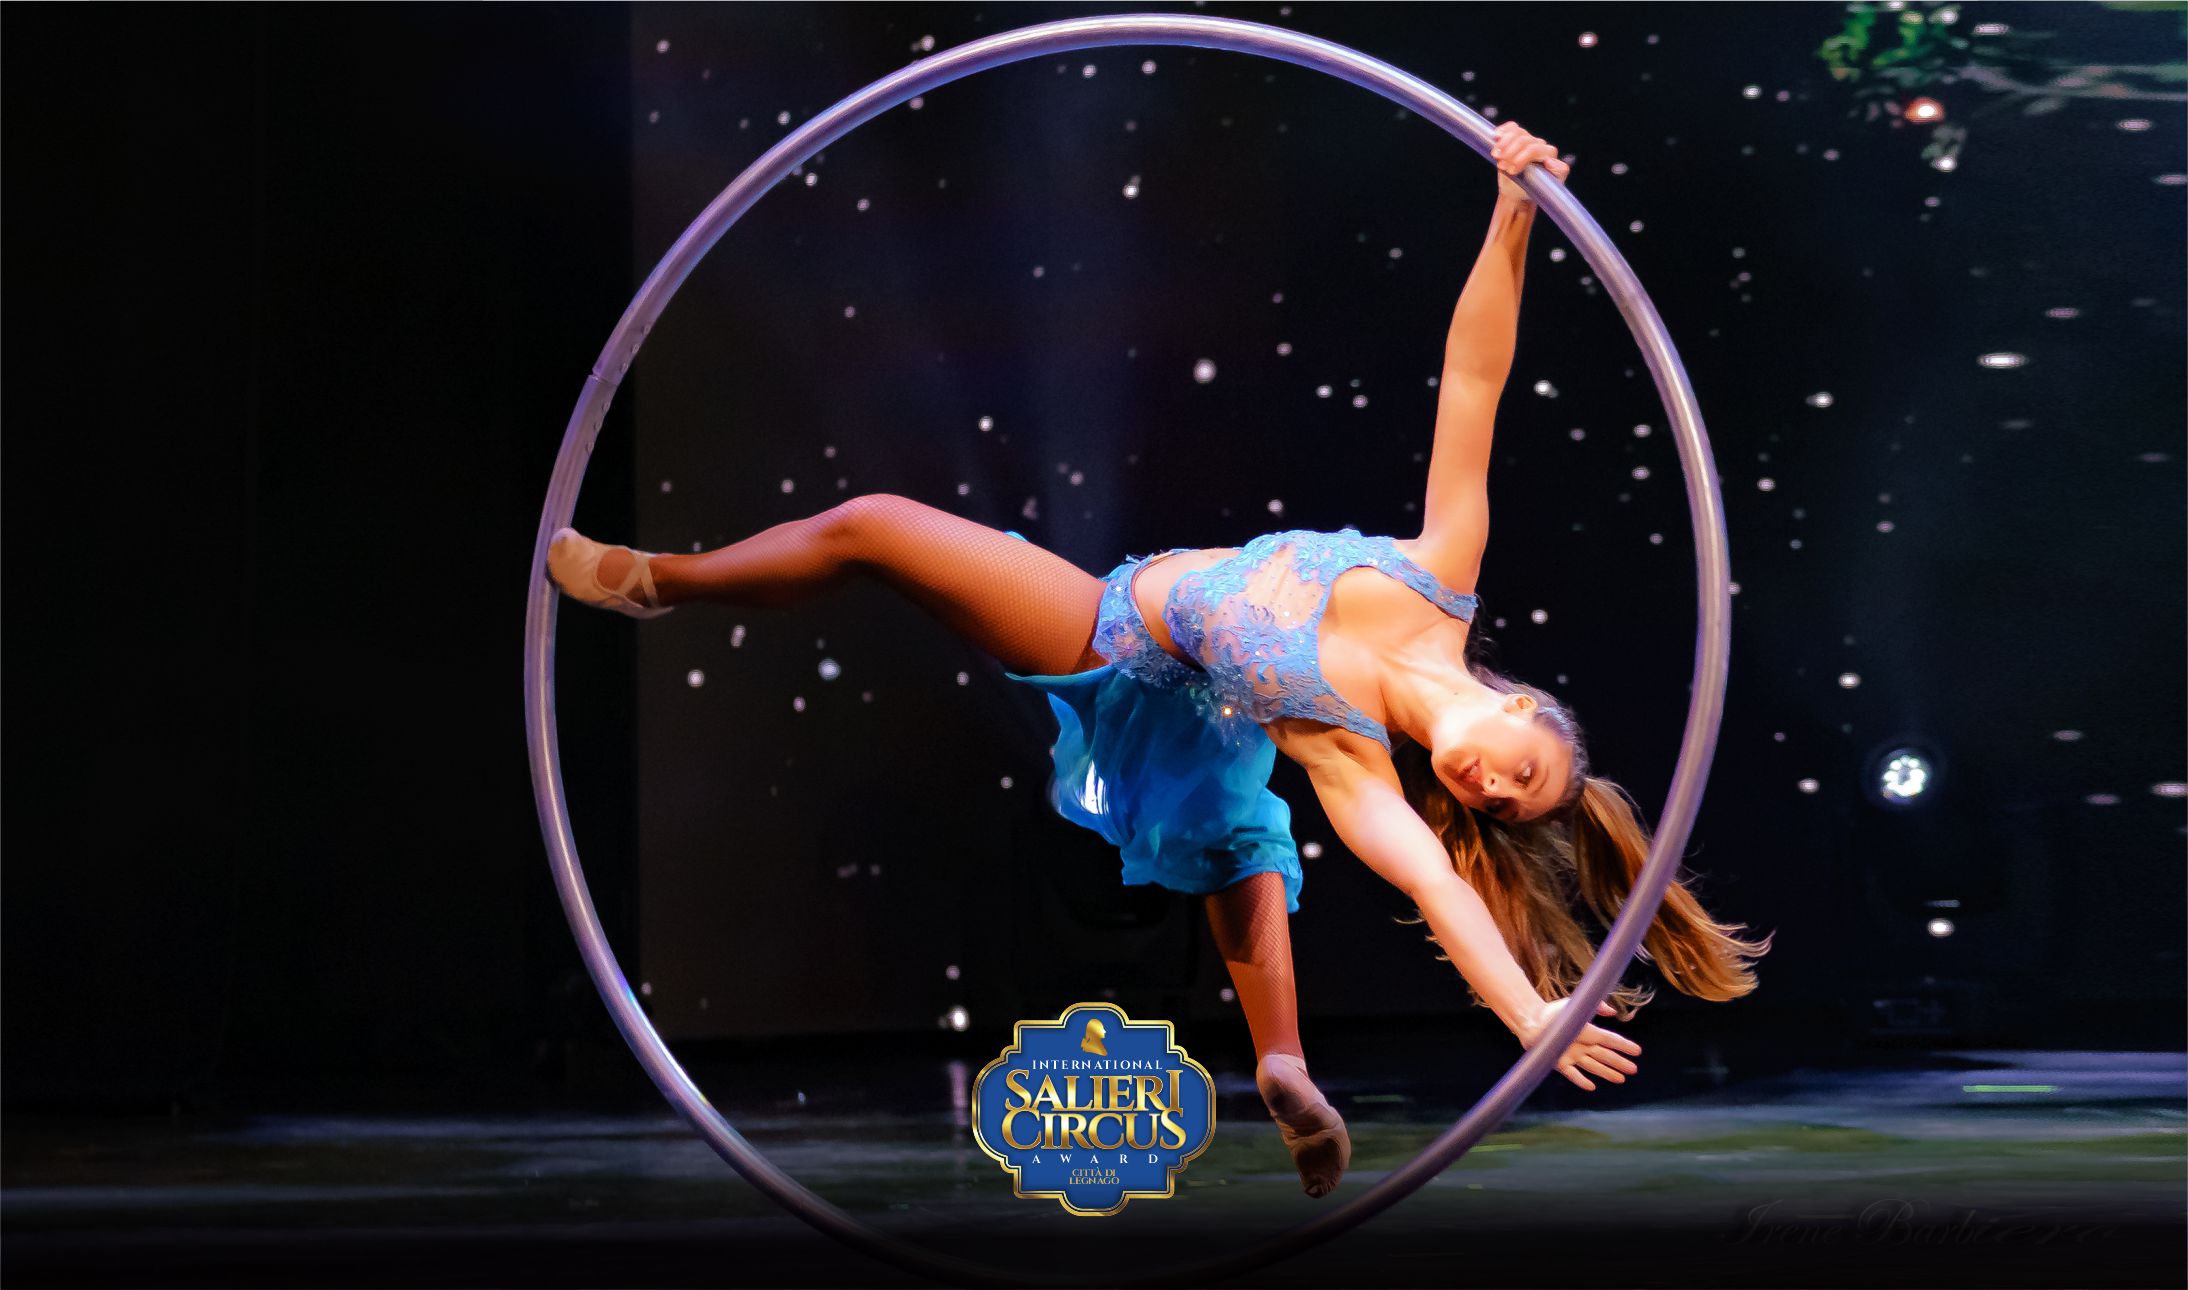 Immagini di International Salieri Circus Award 2021